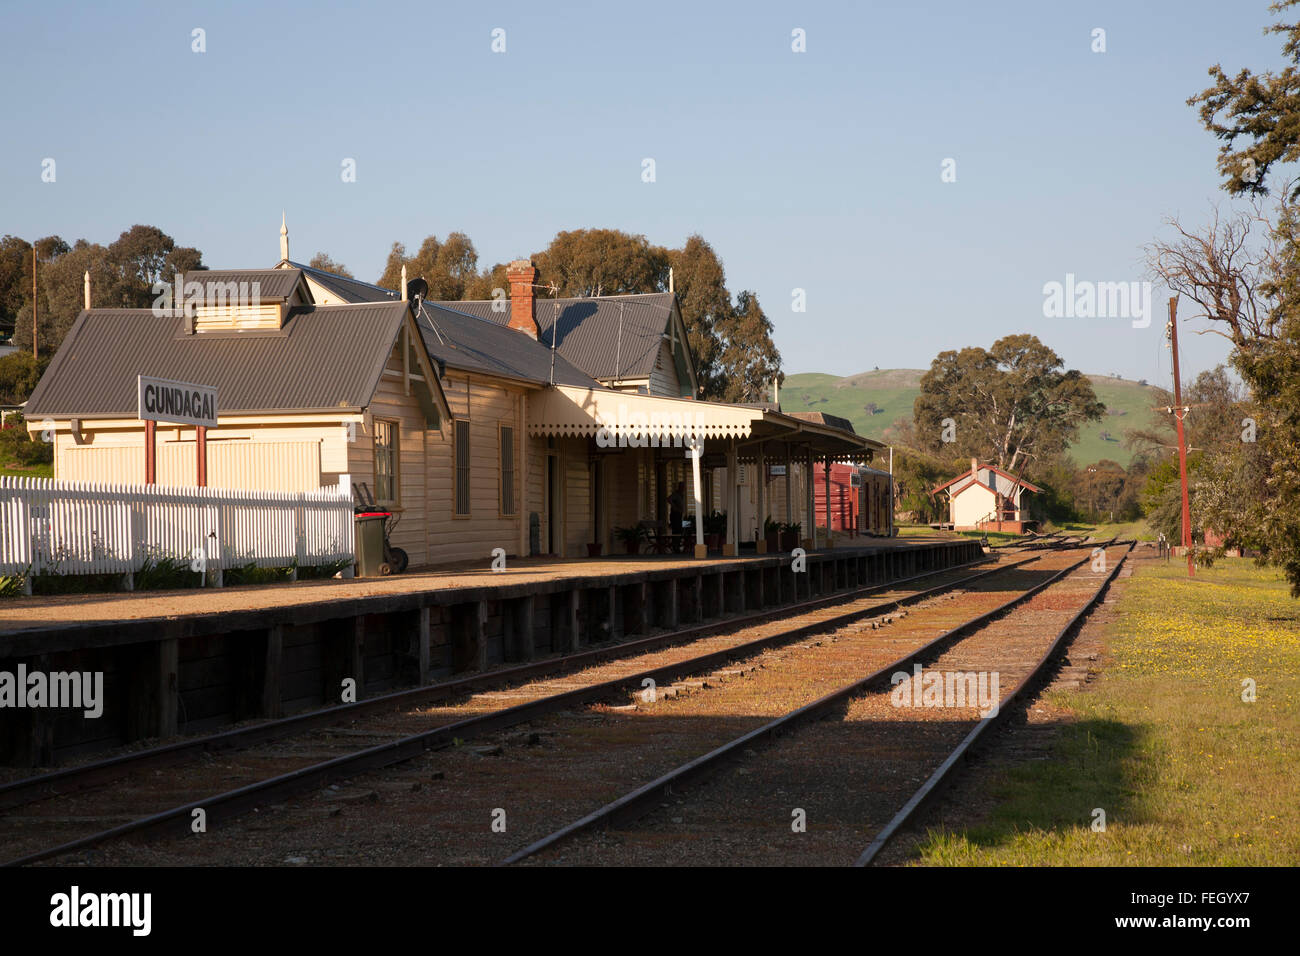 Ehemalige Gundagai Railway Station Gundagai New South Wales Australien Stockfoto